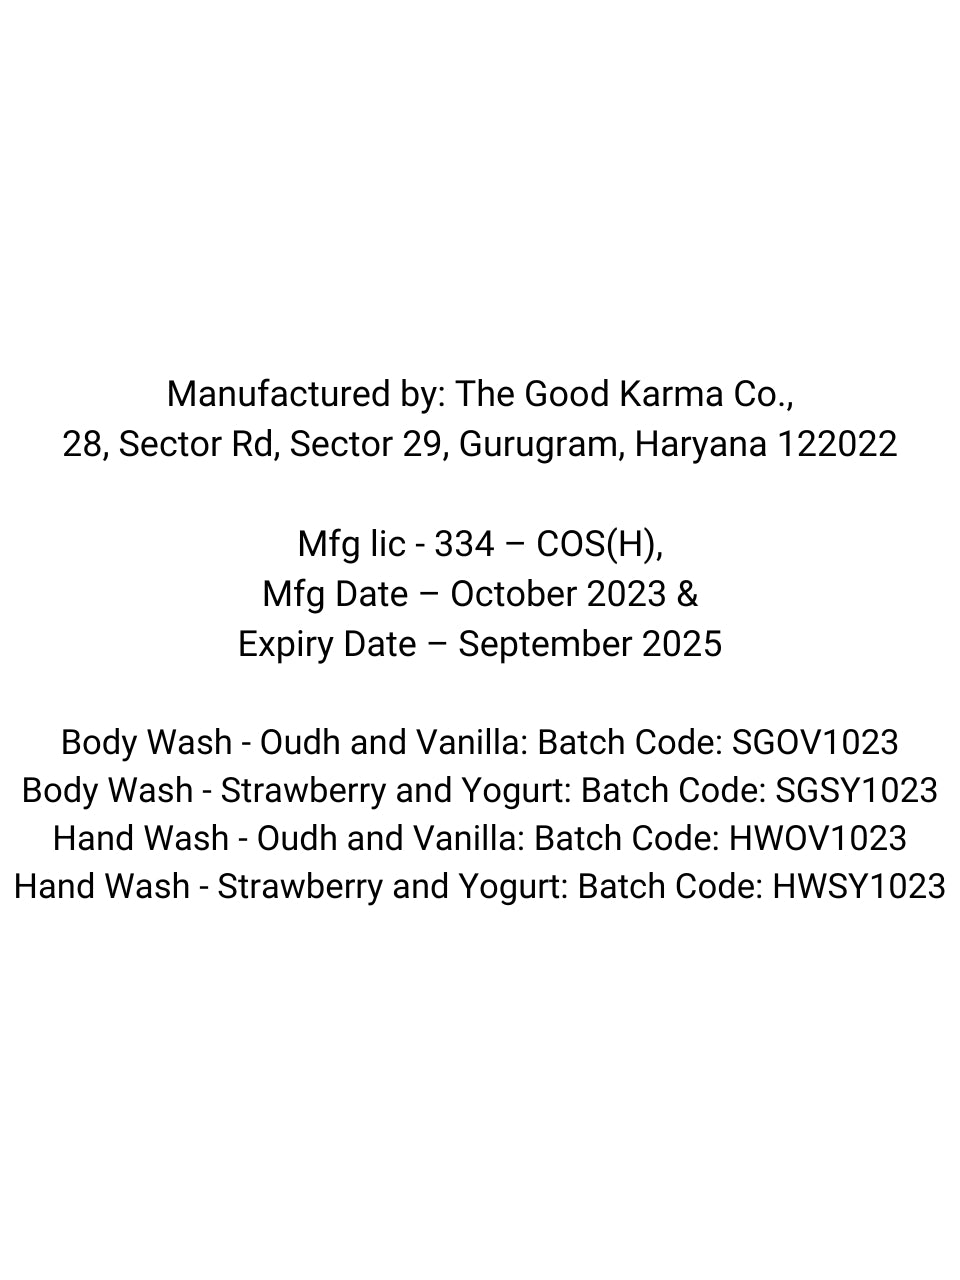 Body Wash and Hand wash combo of 4 packs, 2 x 250mL Body Wash and 2 x 250mL Hand Wash